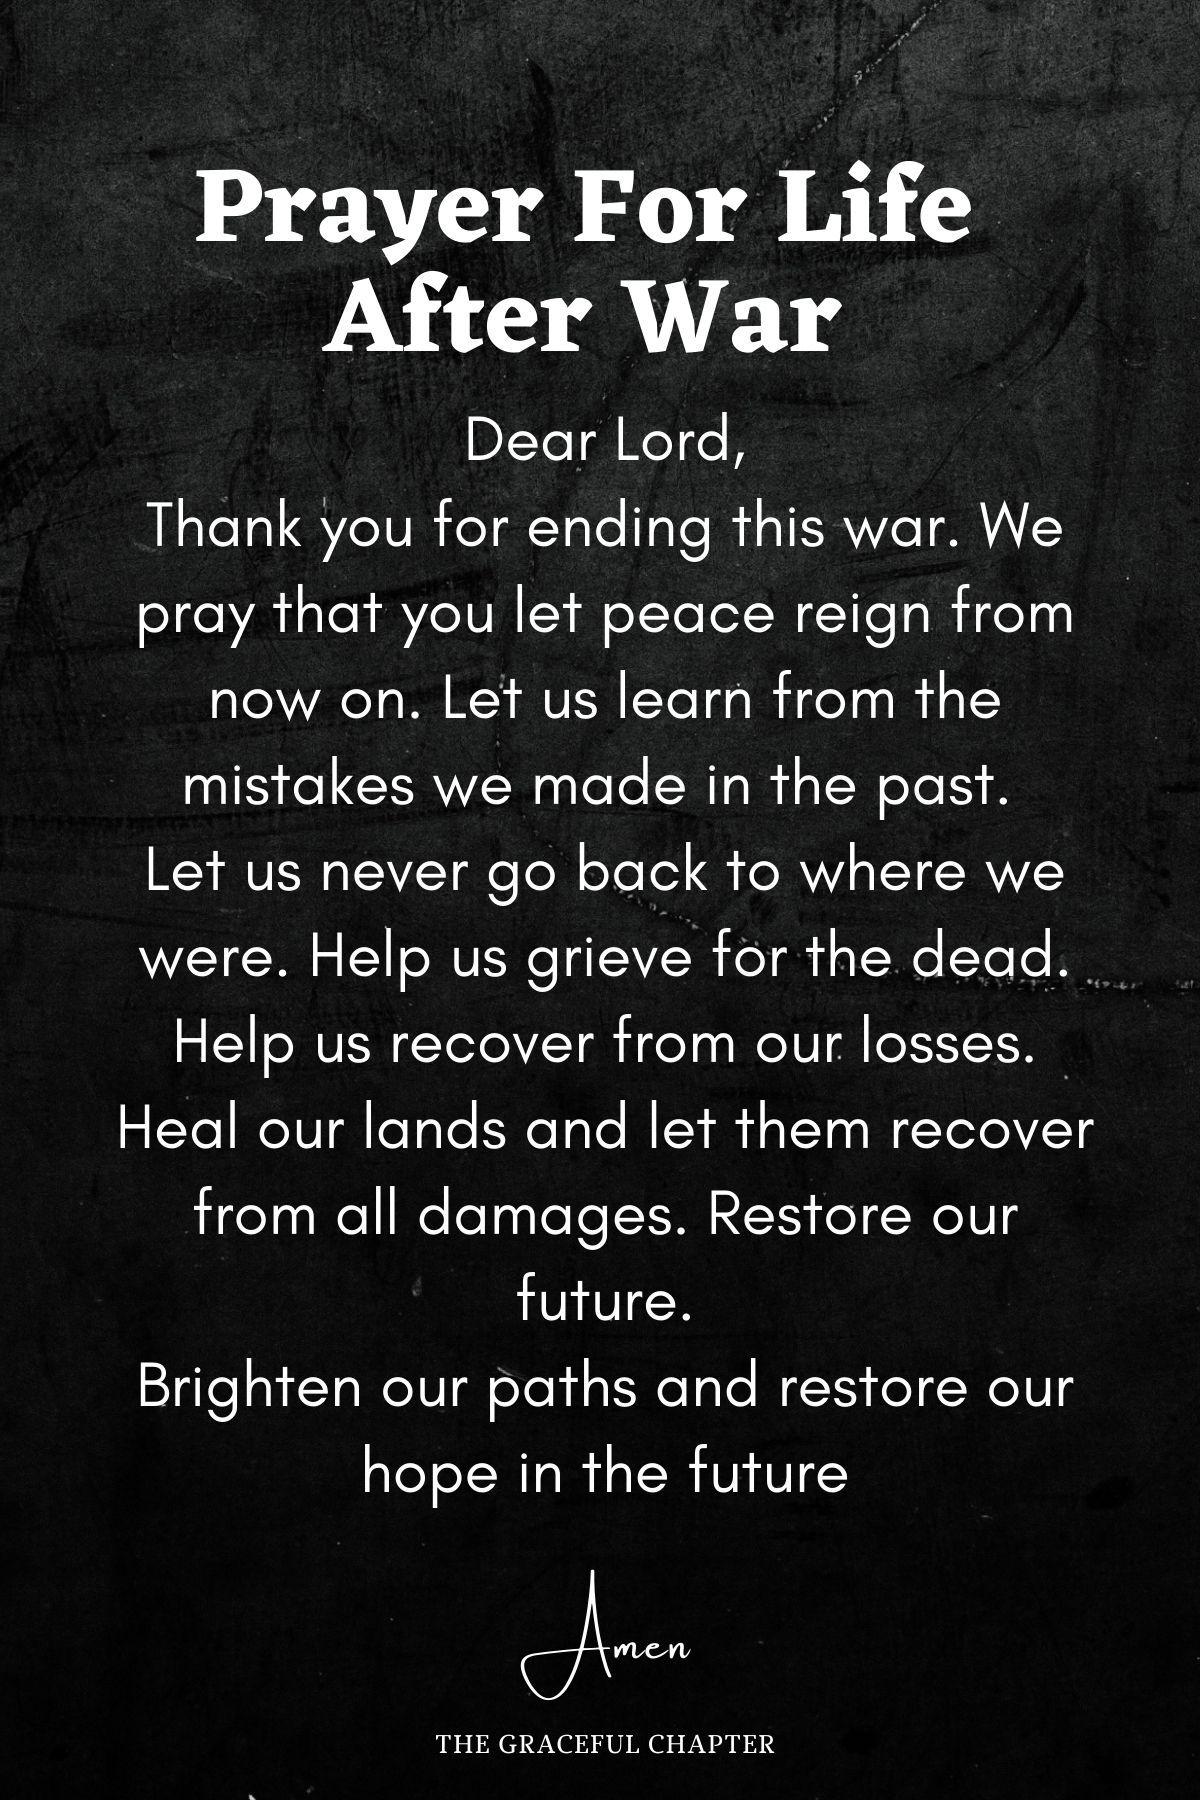 Prayer for life after war